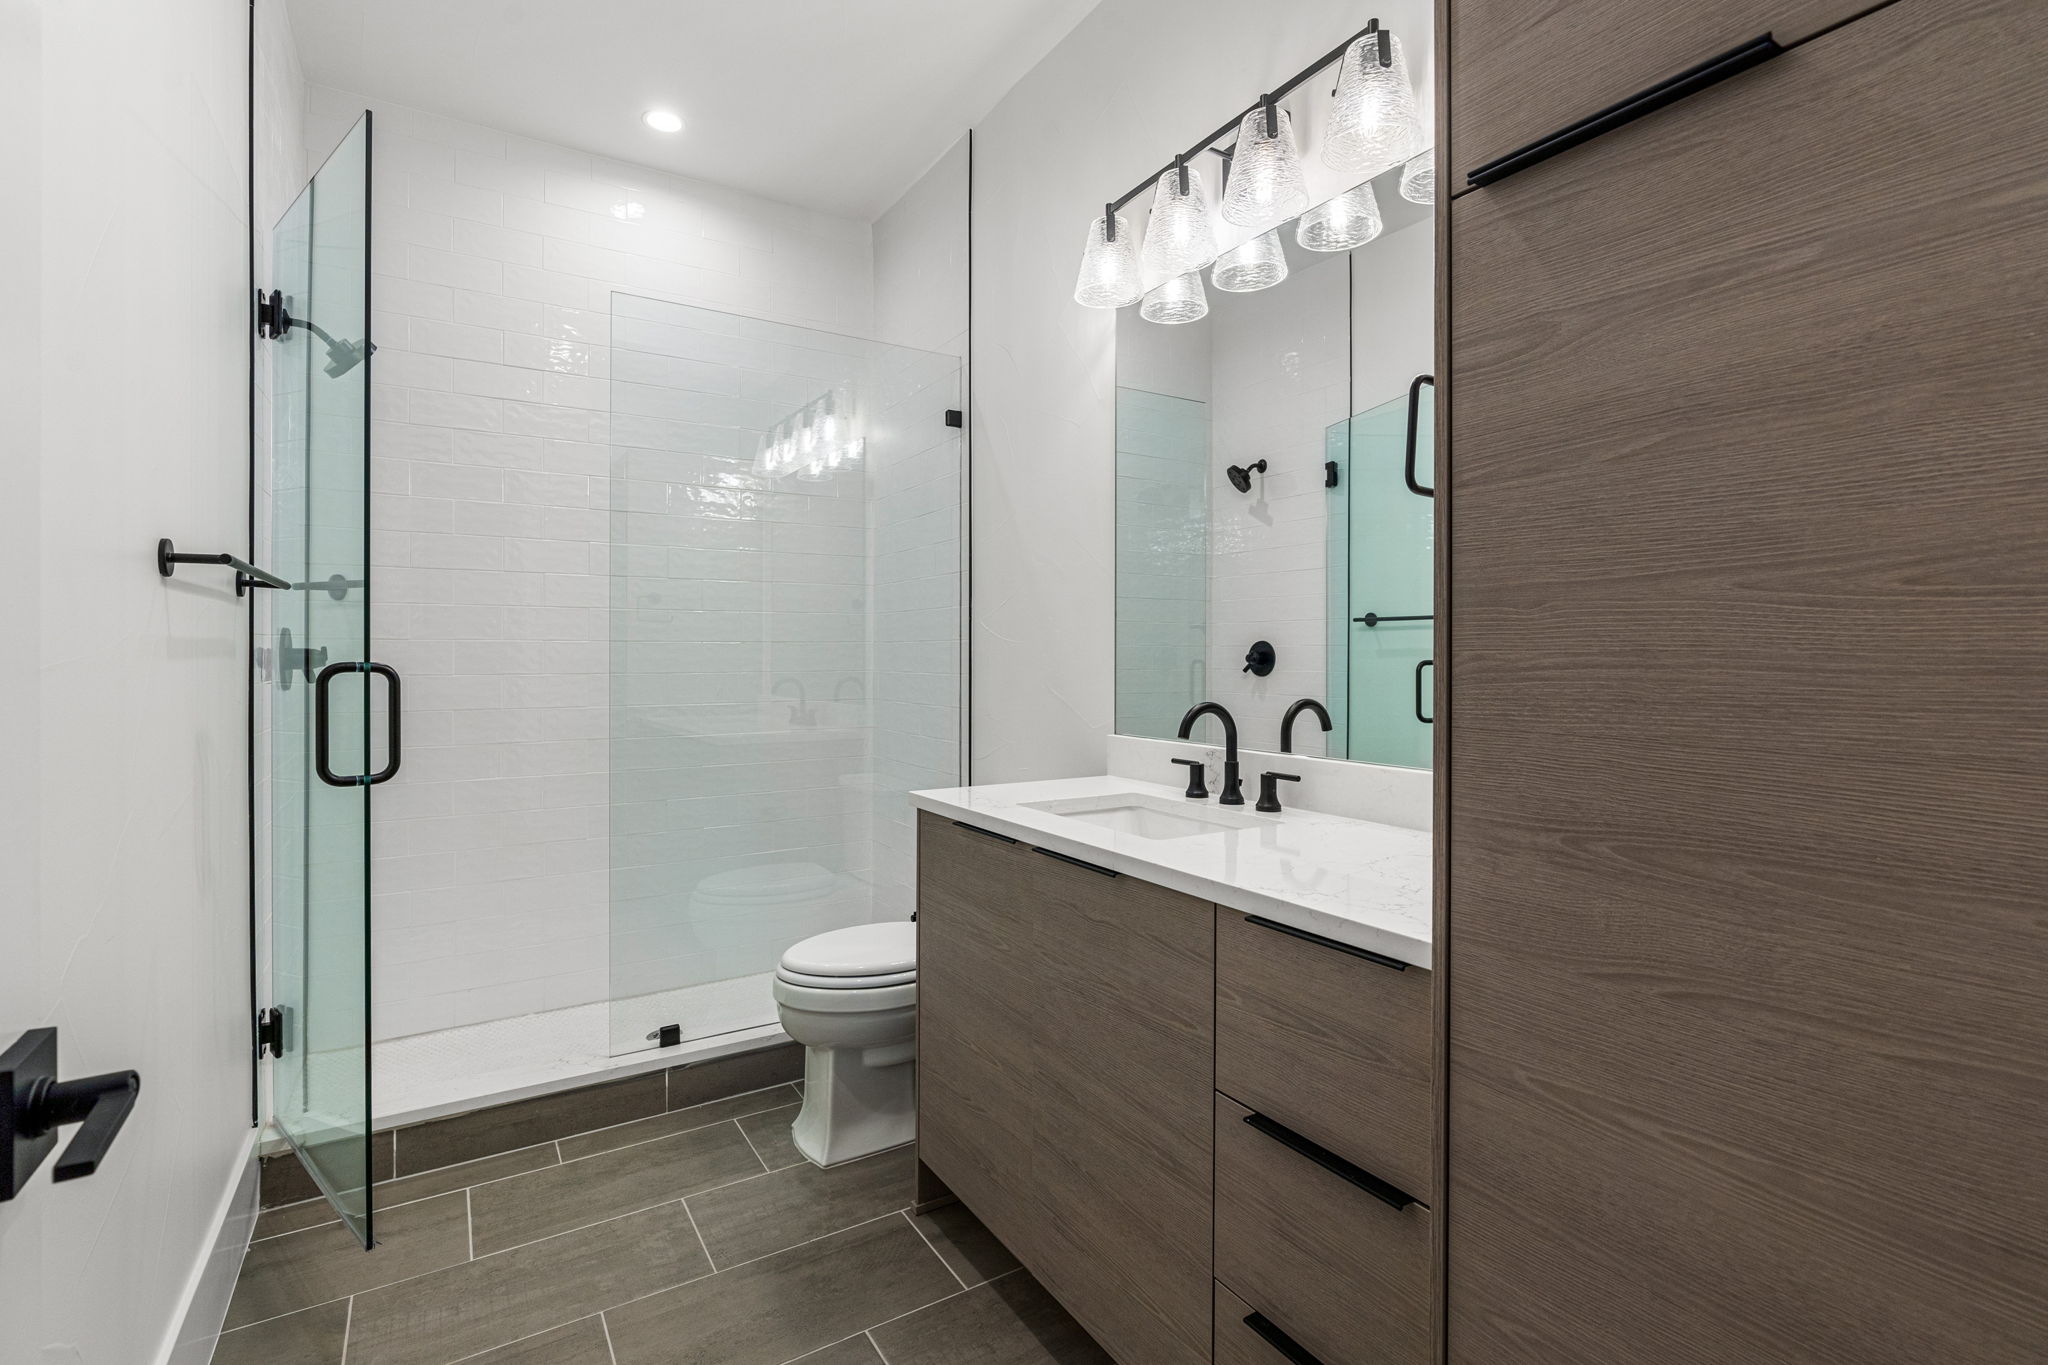 The fourth bathroom has a frameless shower door, decorative tile, & matte black fixtures.